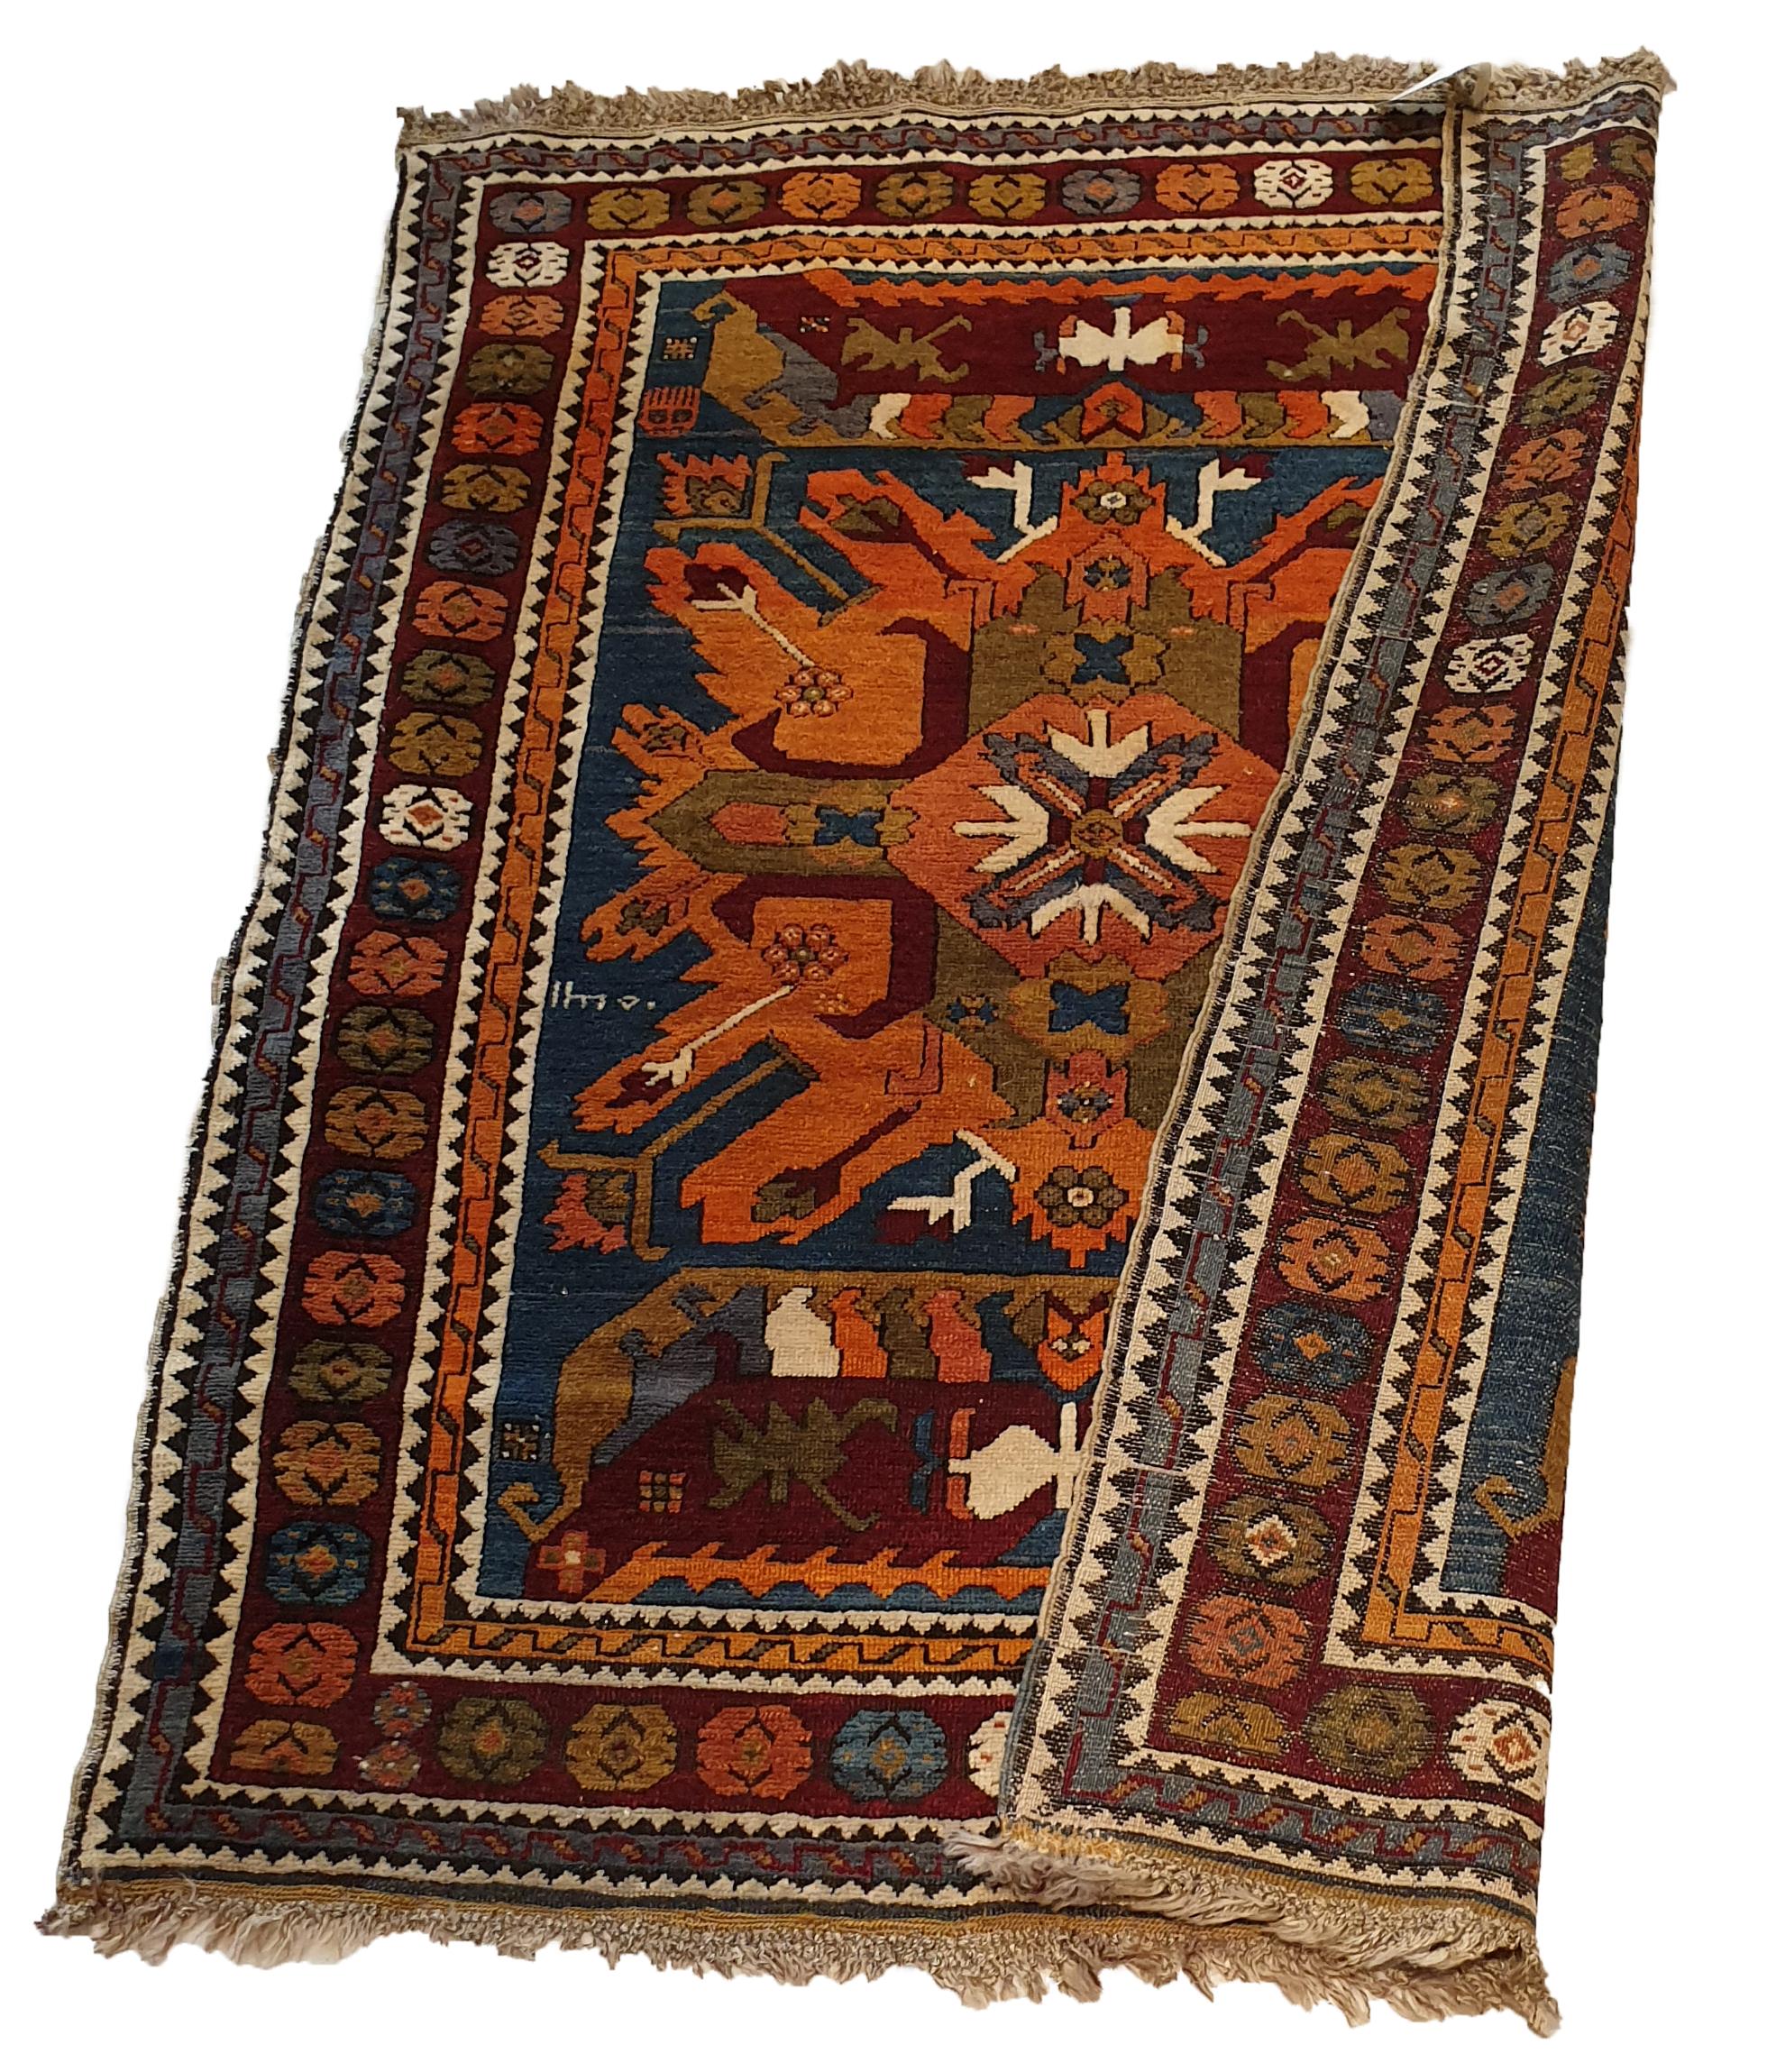 Late 20th Century Kazak Turkish Carpet, 20th Century - N° 734 For Sale